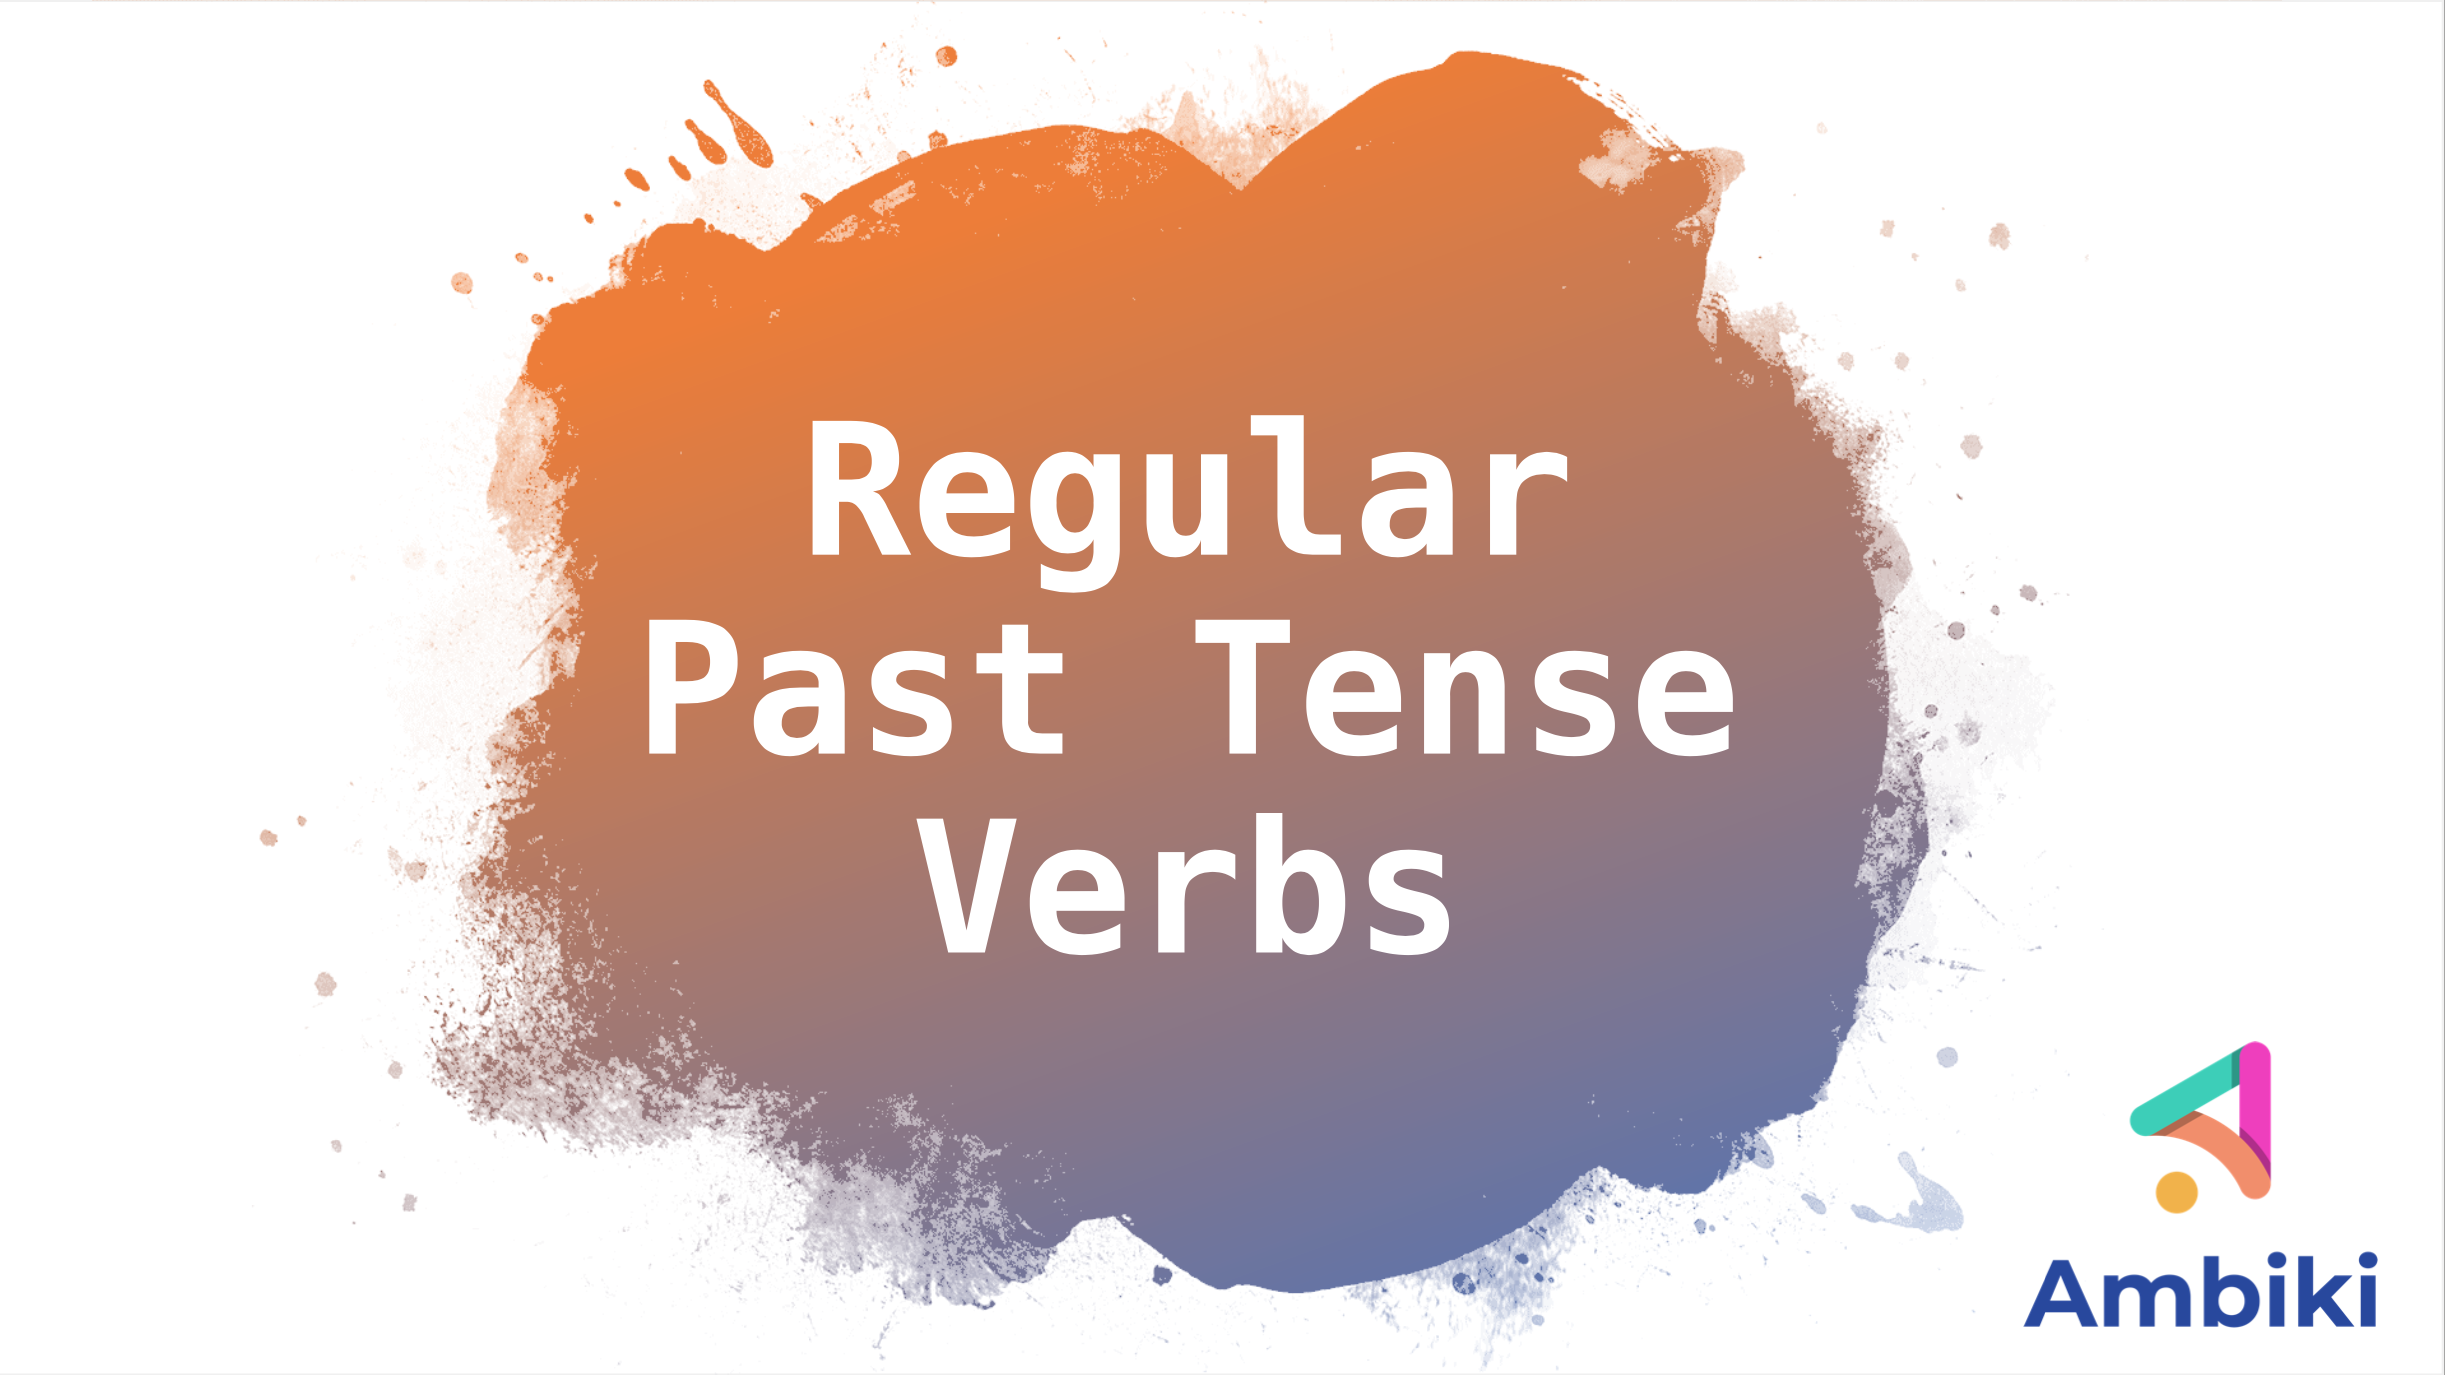 Regular Past Tense Verbs image